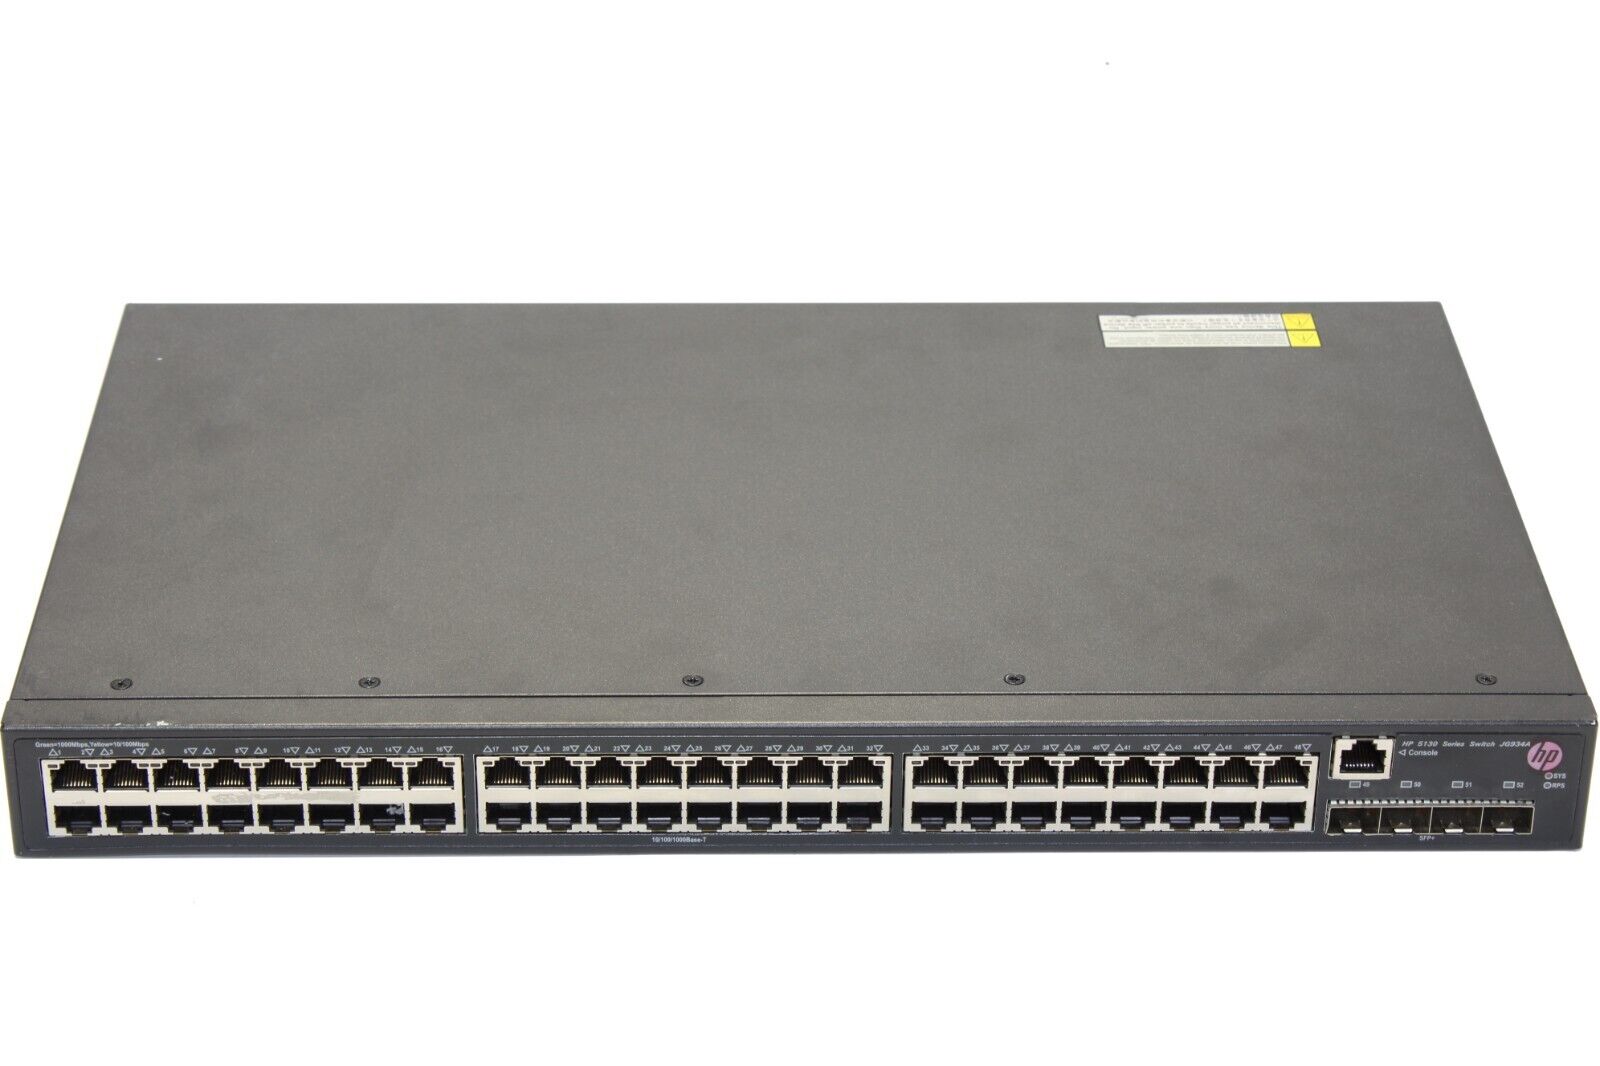 HP 5130 JG934A FlexNetwork 48-4SFP Port 10Gbex 100-240V 50-60 Hz Ethernet Switch